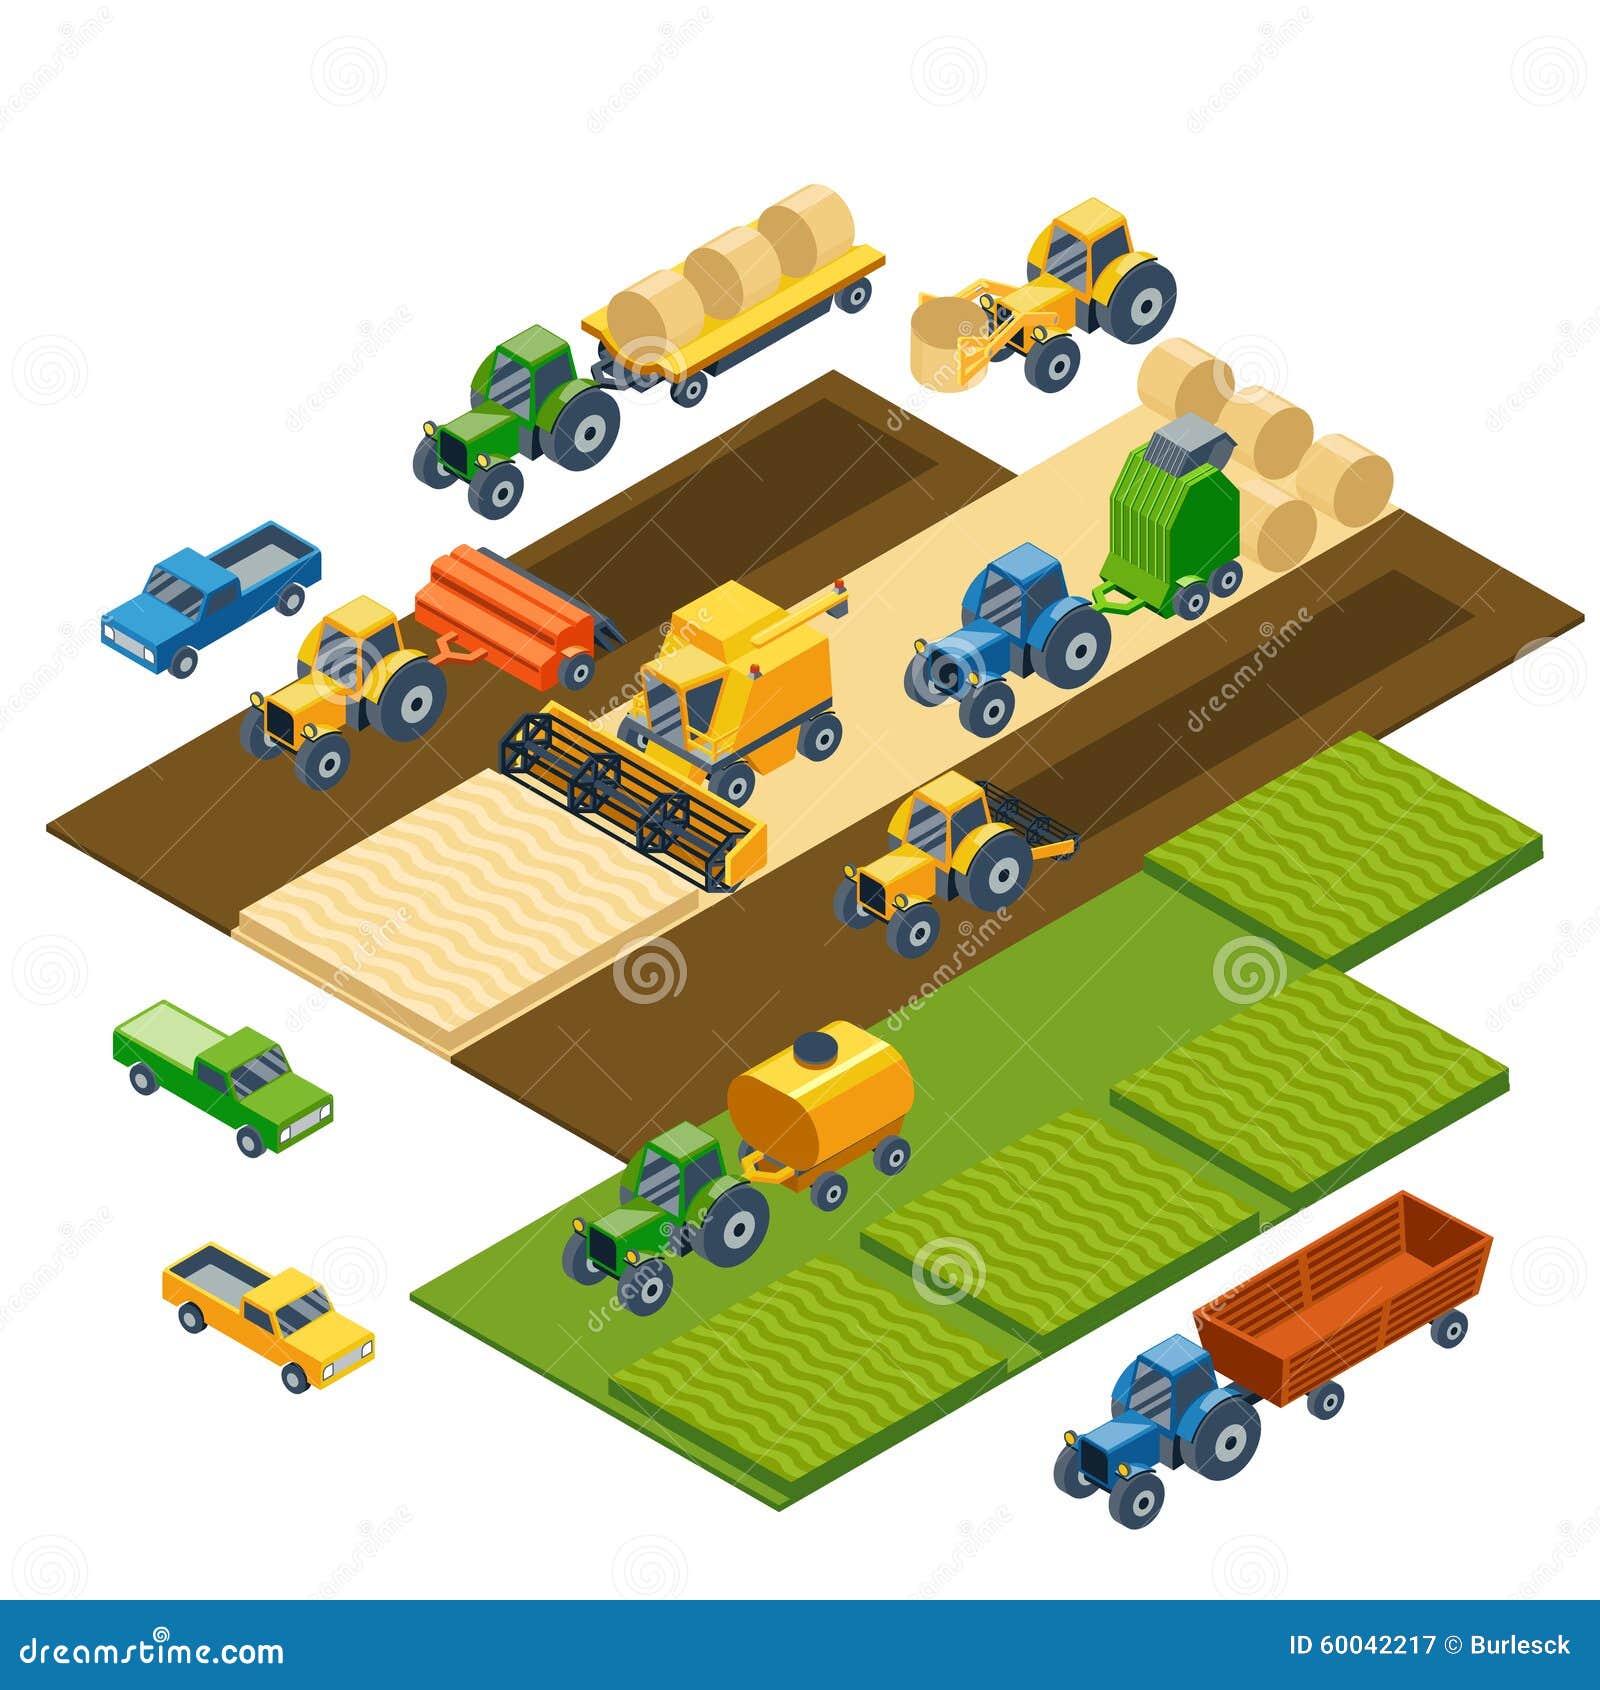 isometric agricultural equipment, farm tractors